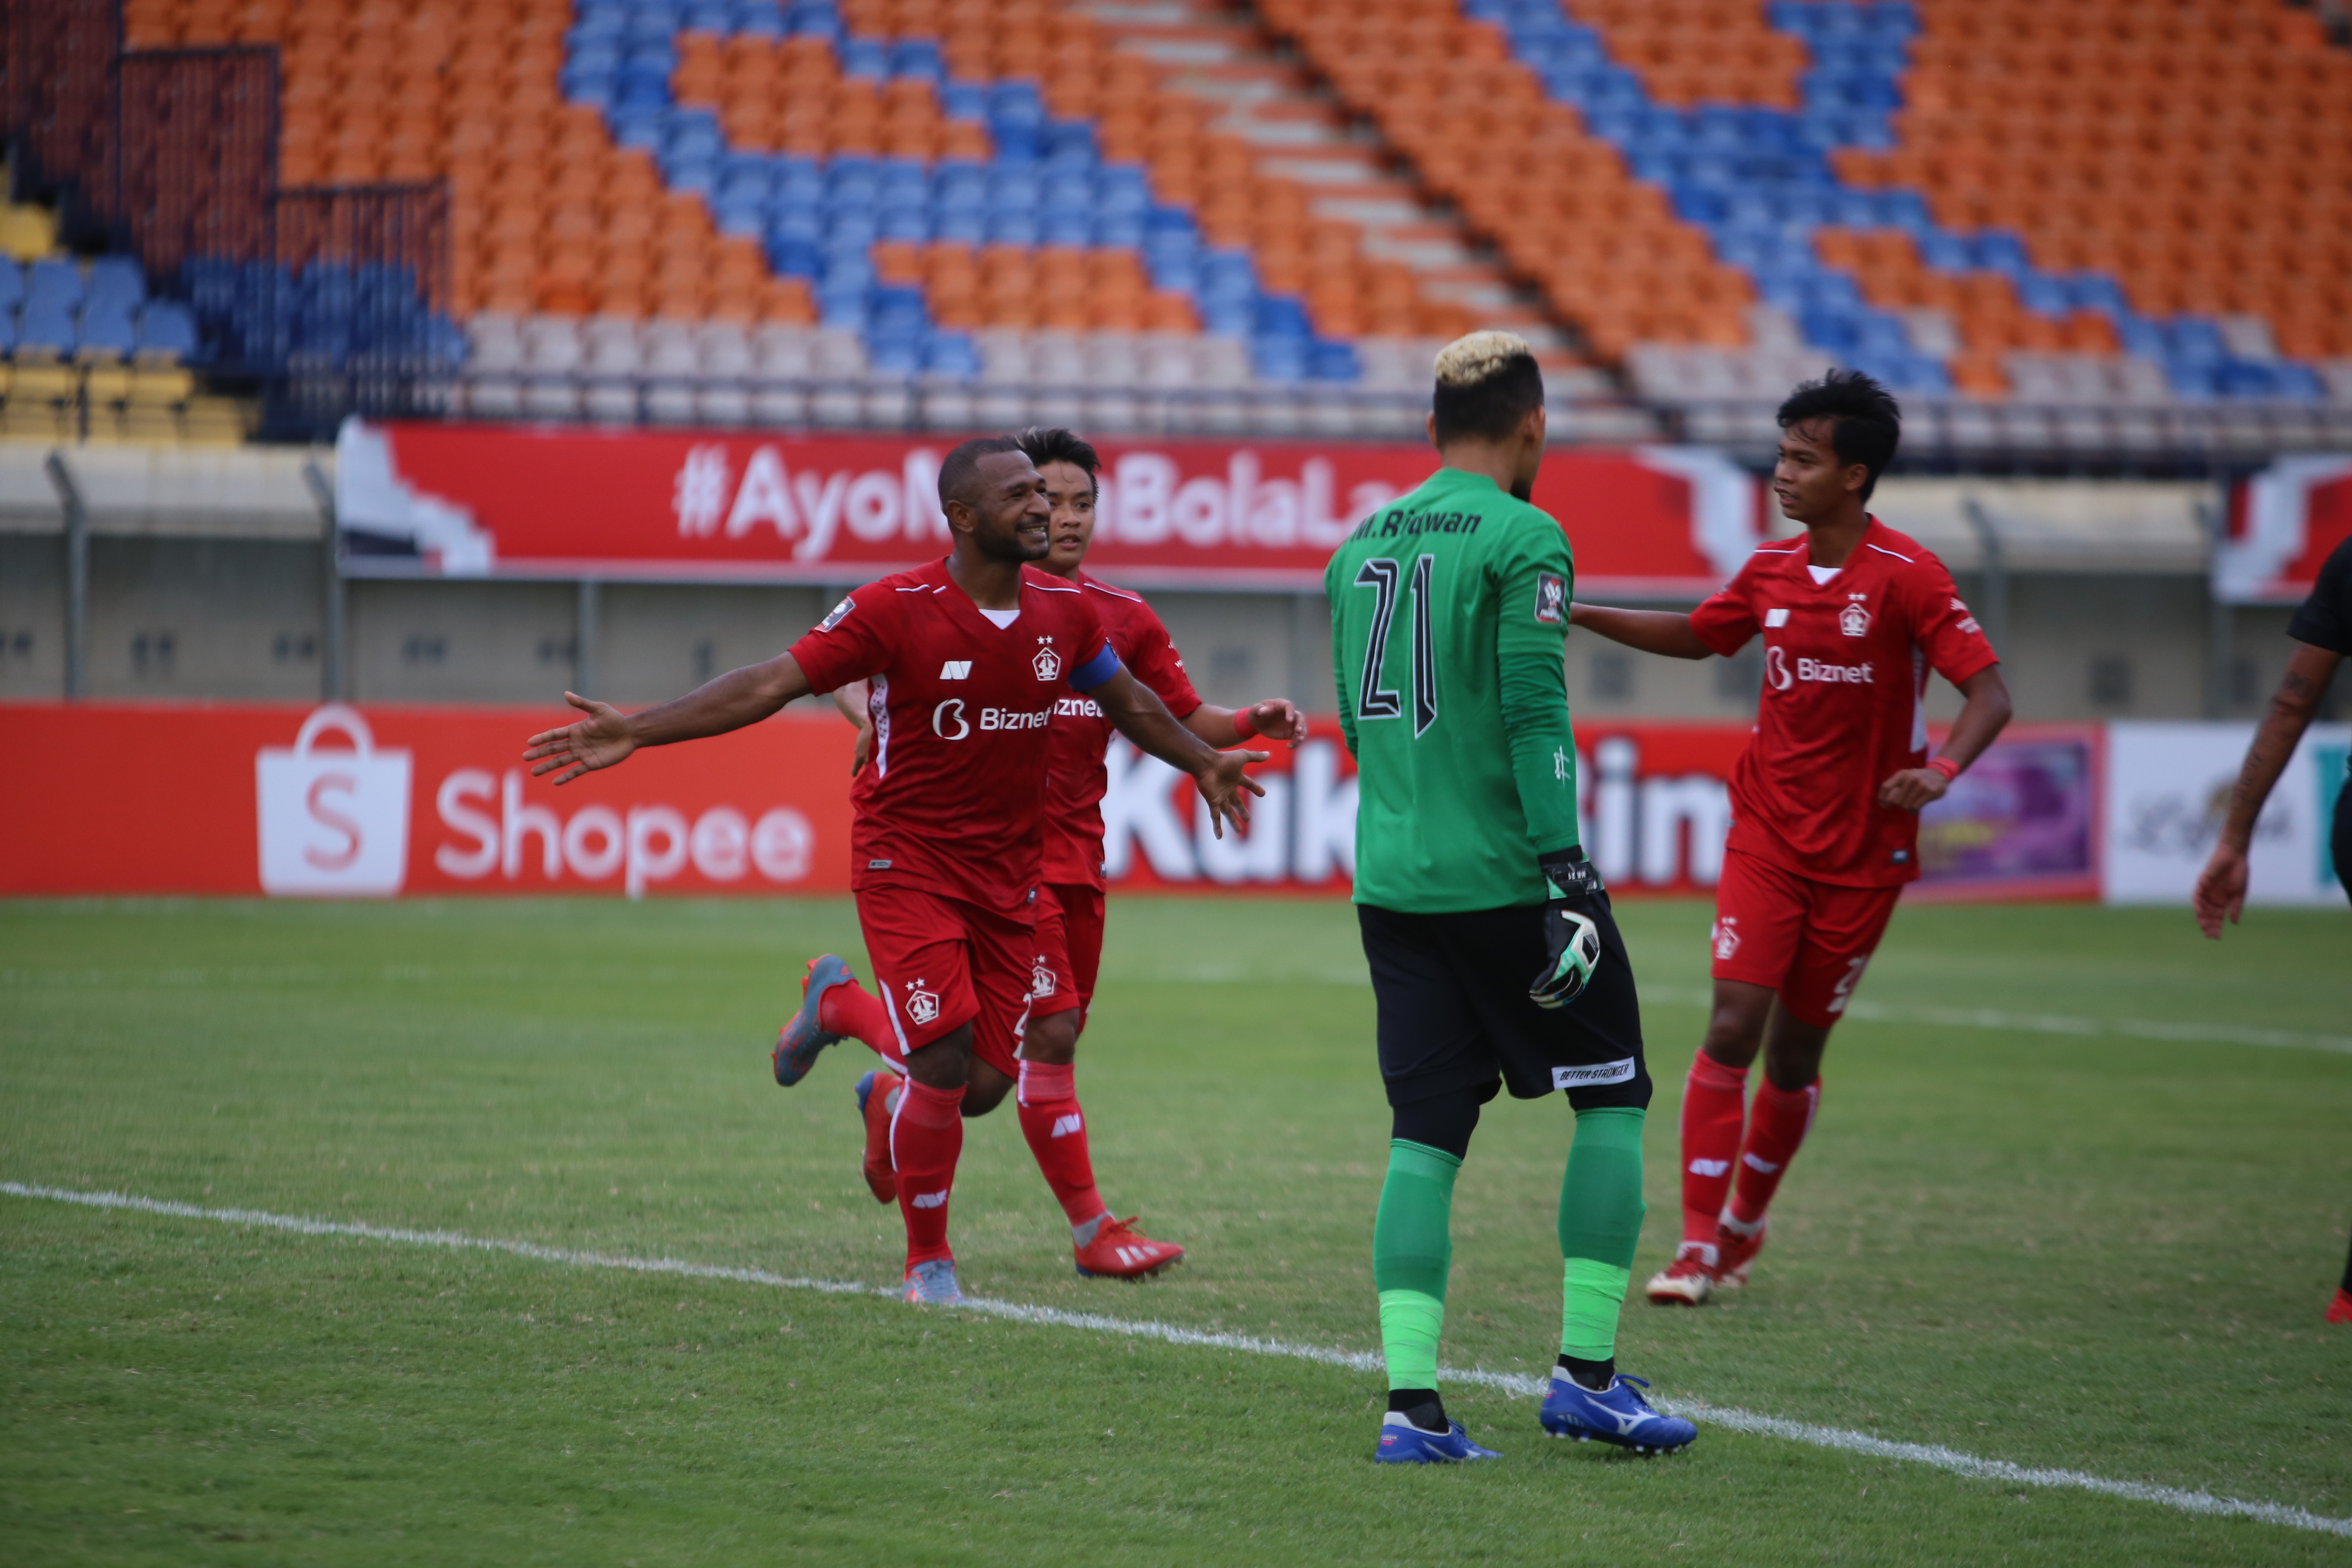 Kapten tim Andri Ibo rayakan gol ke gawang Madura United. (Foto: Istimewa)